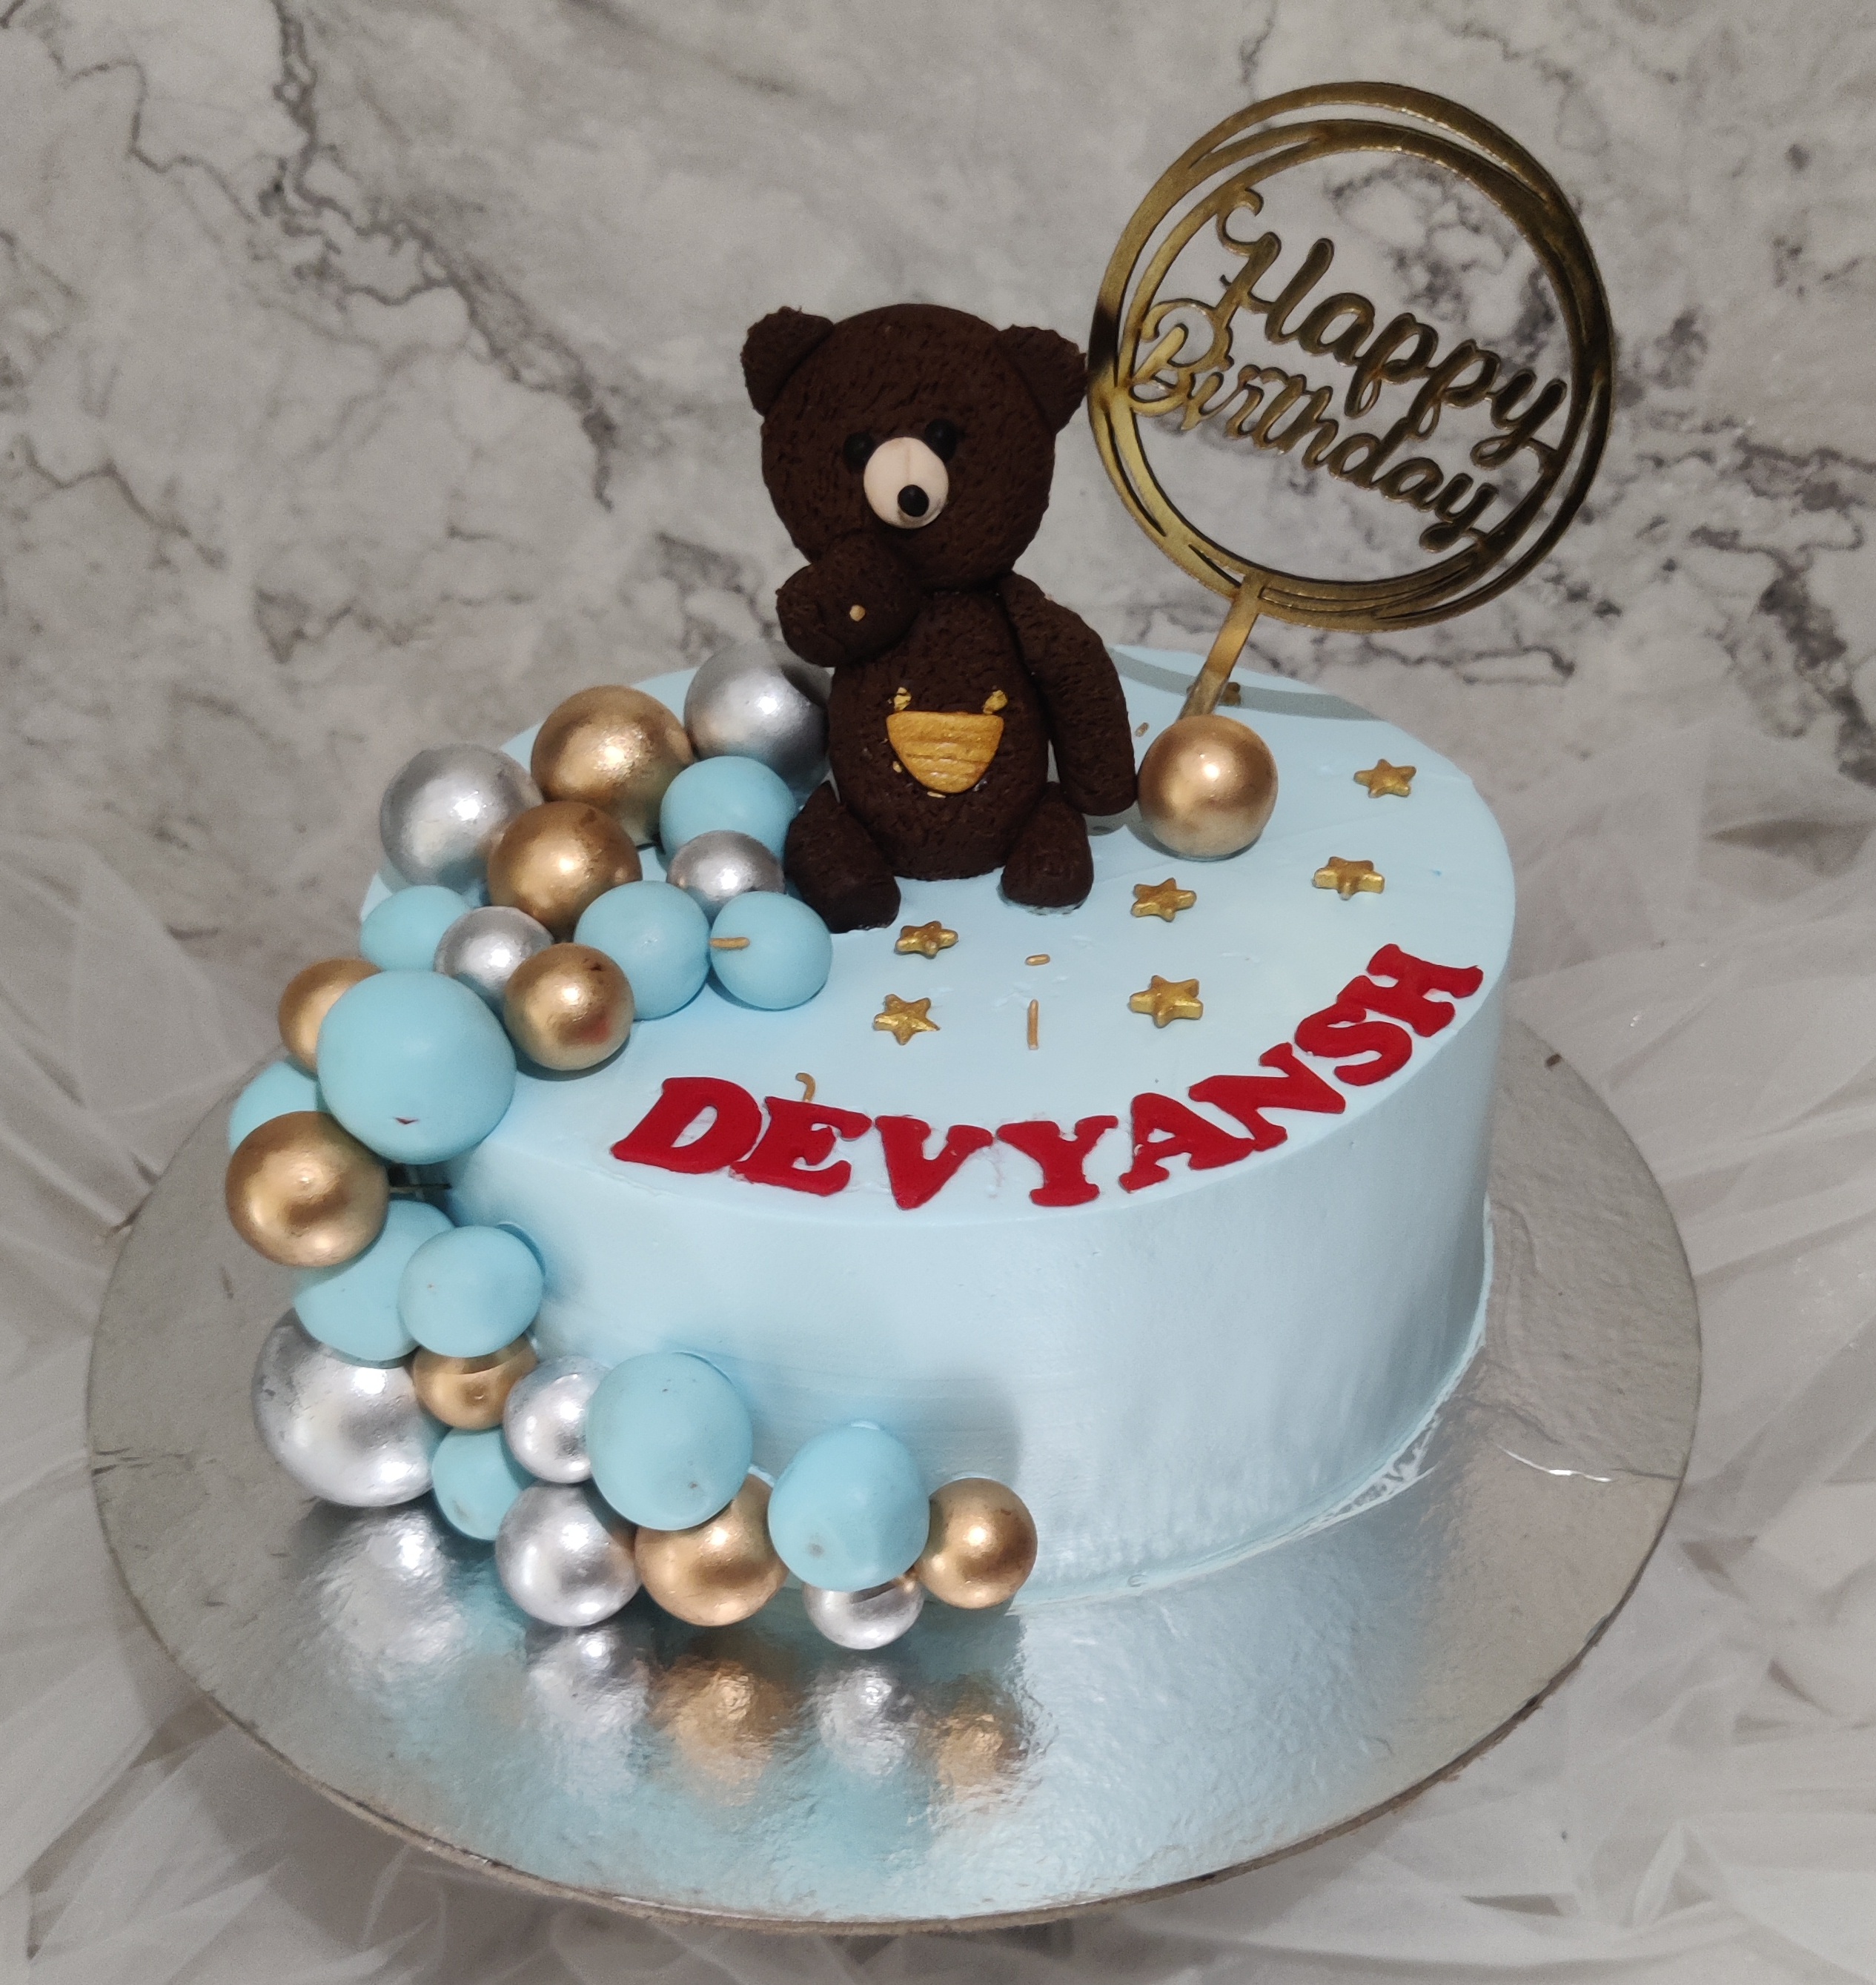 Teddy bear cake - Decorated Cake by Wafaa mahmoud - CakesDecor